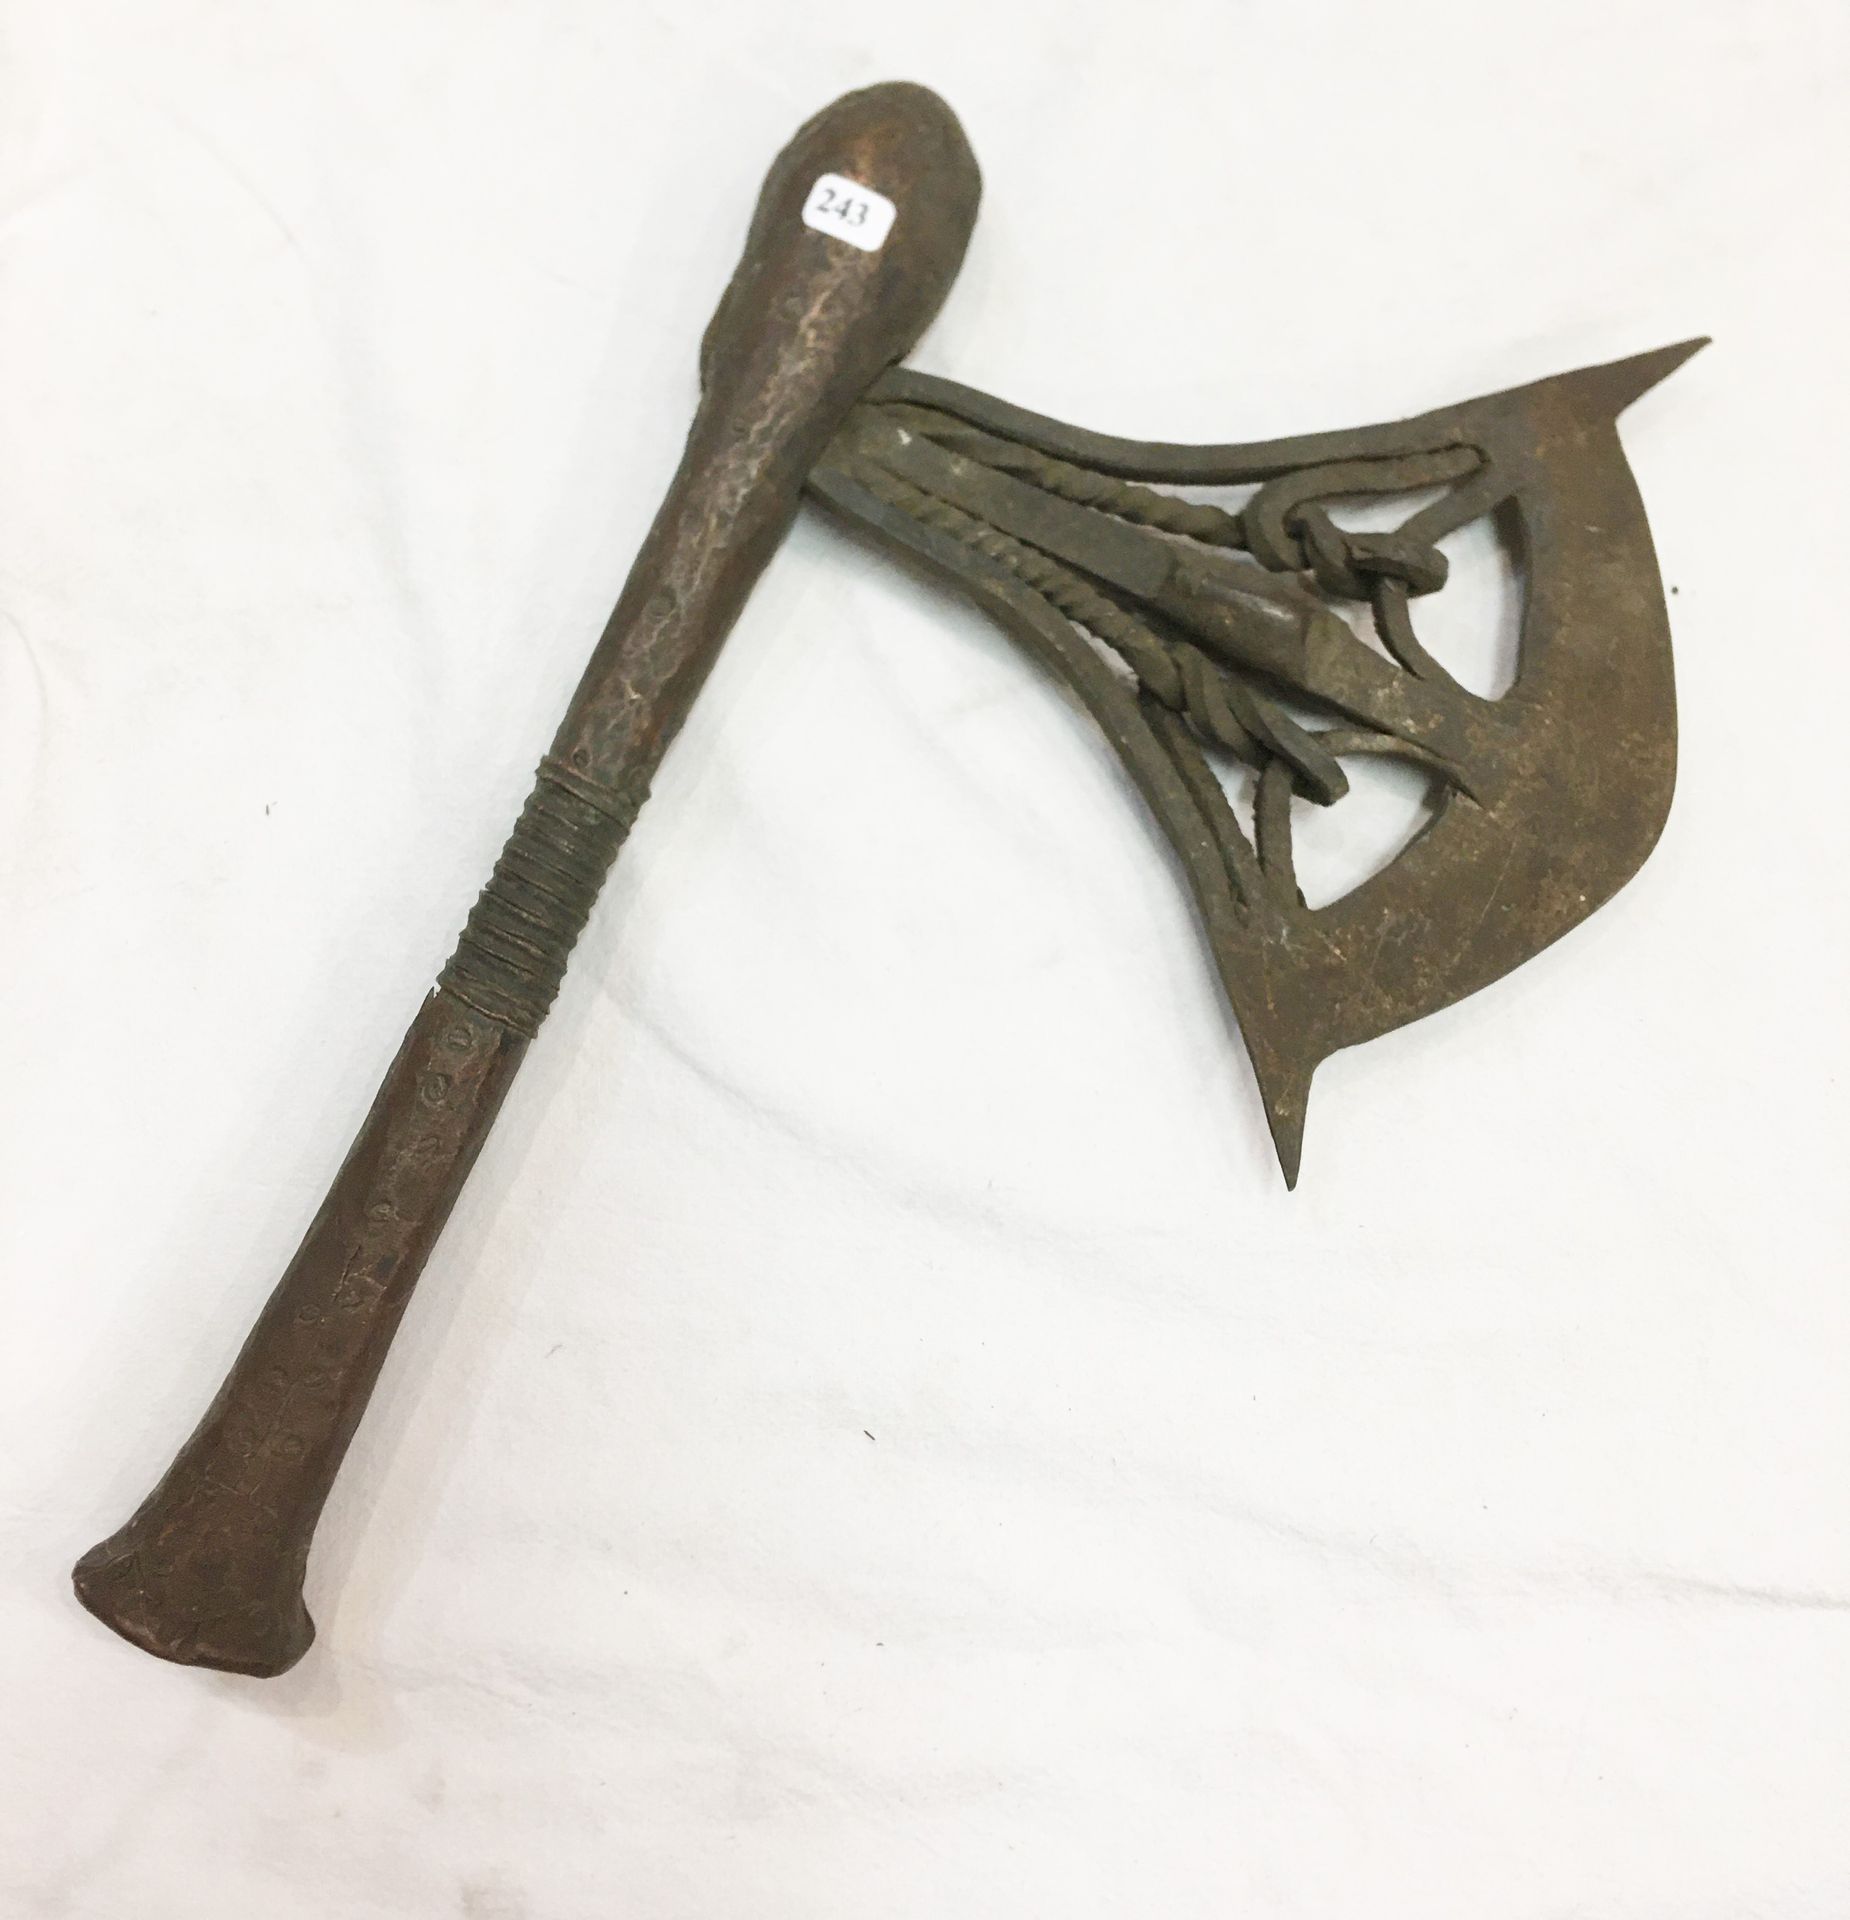 Null 由金属、木头和铜制成的大型古代威望斧。宋业。刚果。铁制的刀刃上有两个锻造的头，刀柄上有钉子的铜片。高度：34厘米。

使用时的旧斑纹。